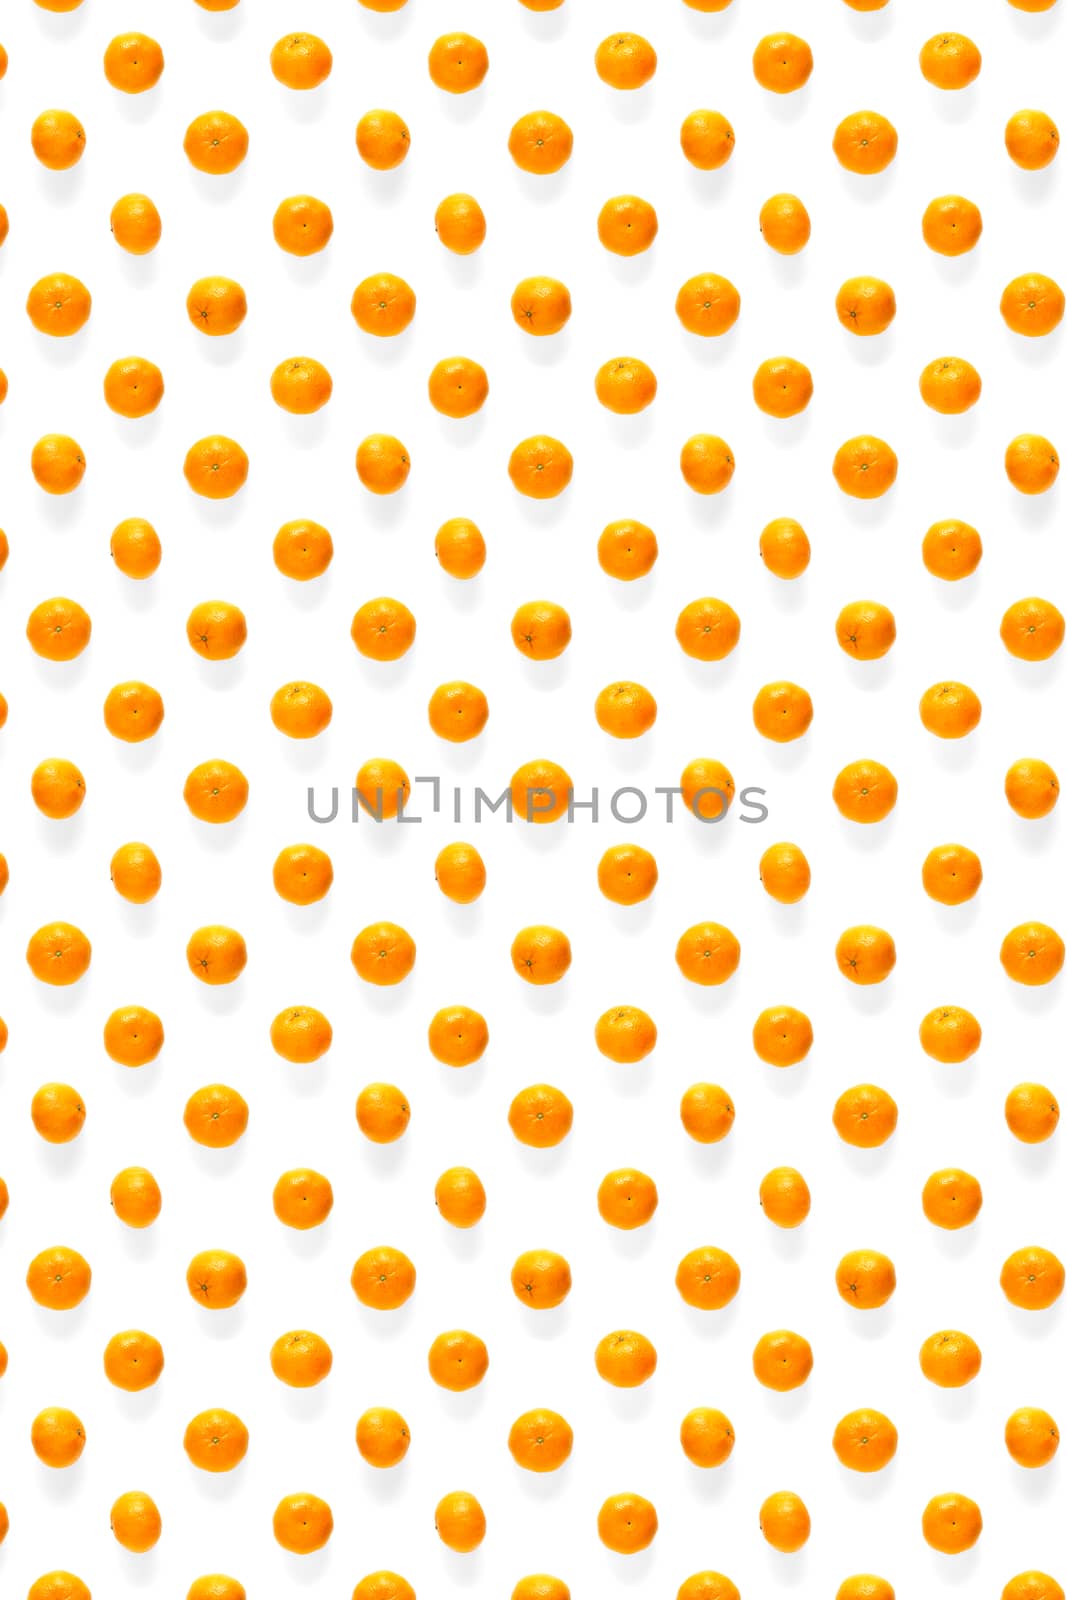 Isolated tangerine citrus collection background. Whole tangerines or mandarin orange fruits isolated on white background not pattern